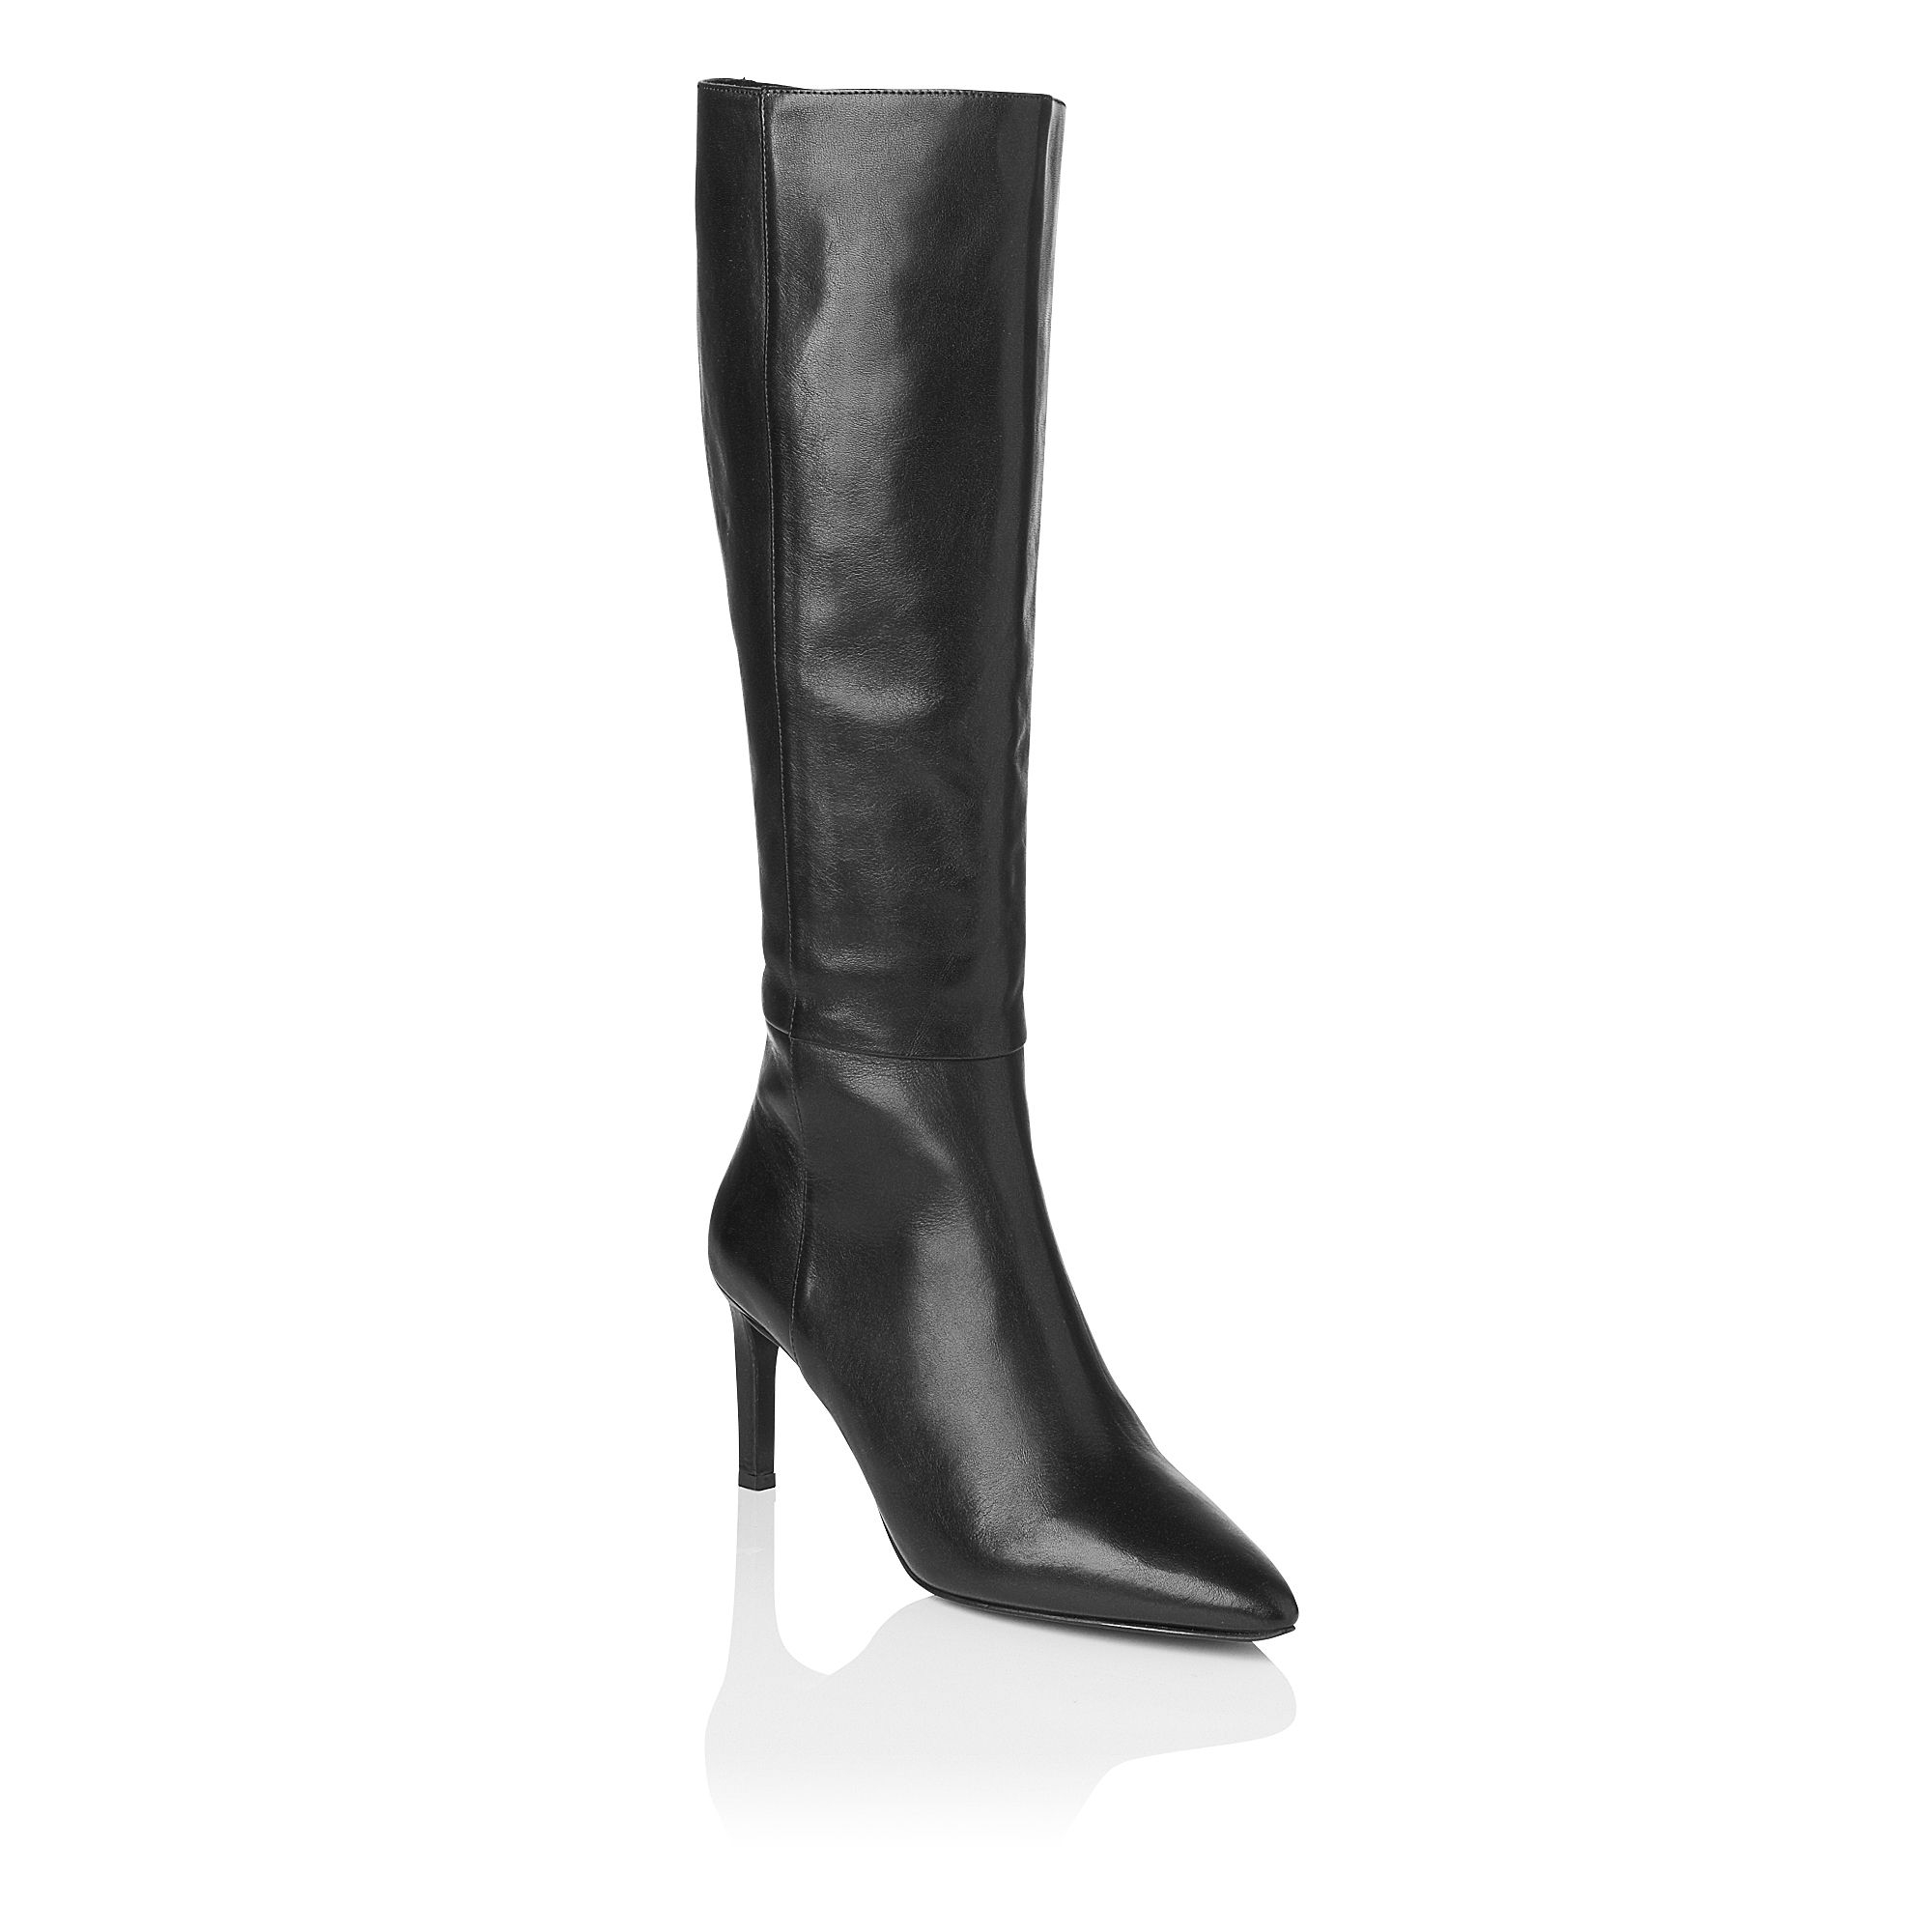 L.k.bennett Romy High Heeled Leather Knee High Boots in Black | Lyst